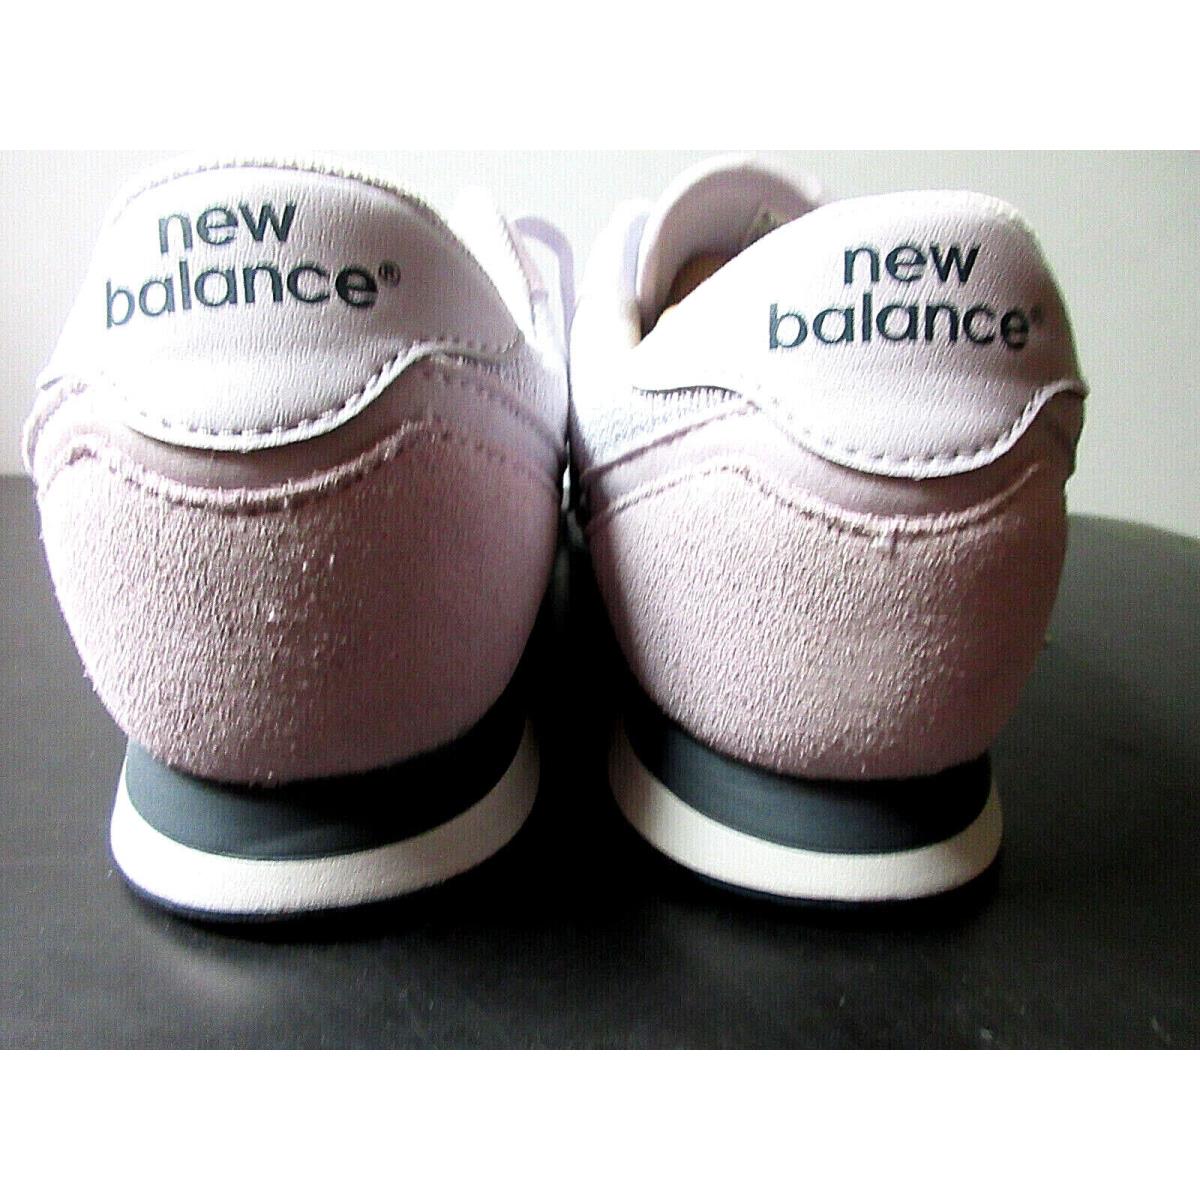 New Balance shoes  - Light Lavender 7